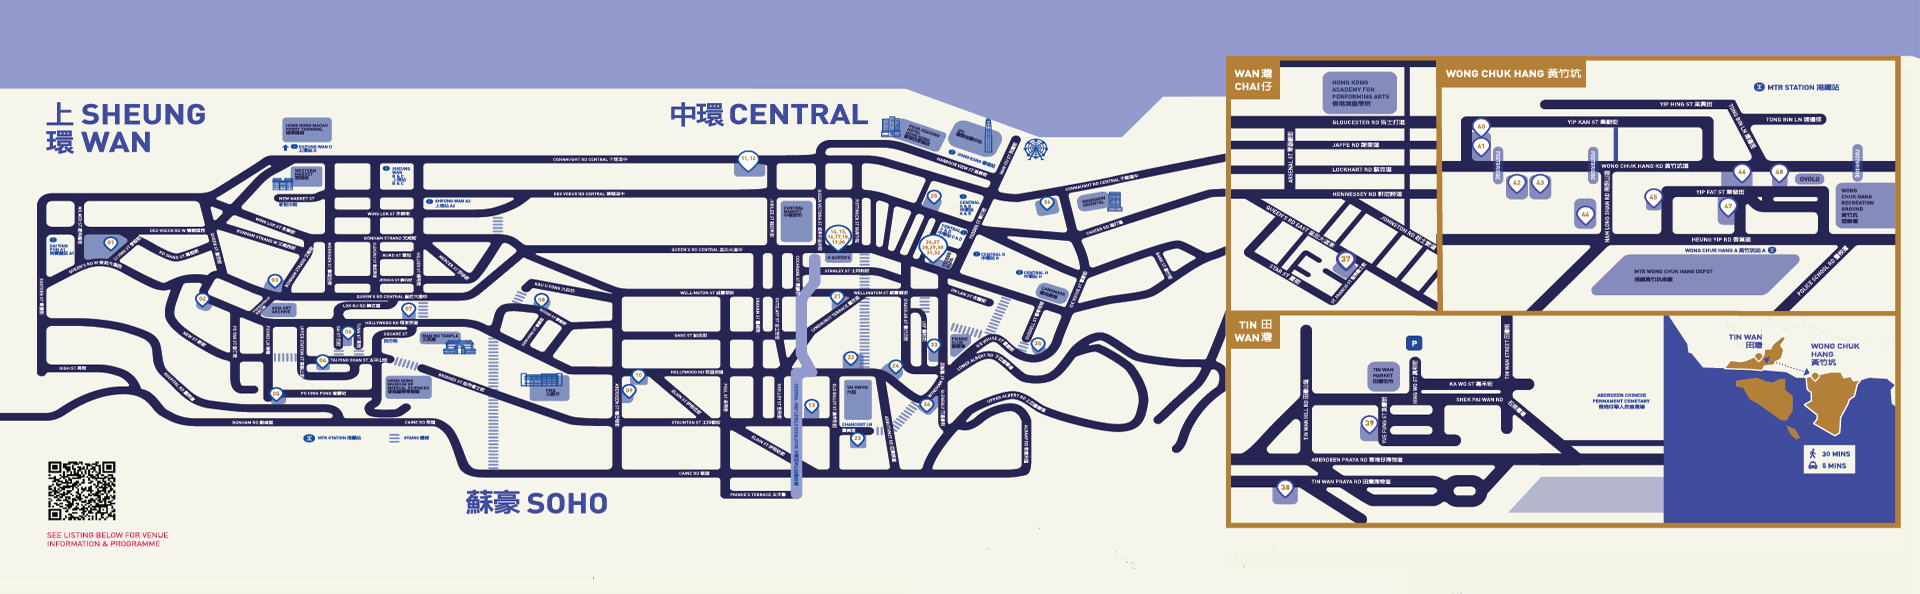 HKAW-2019-Map